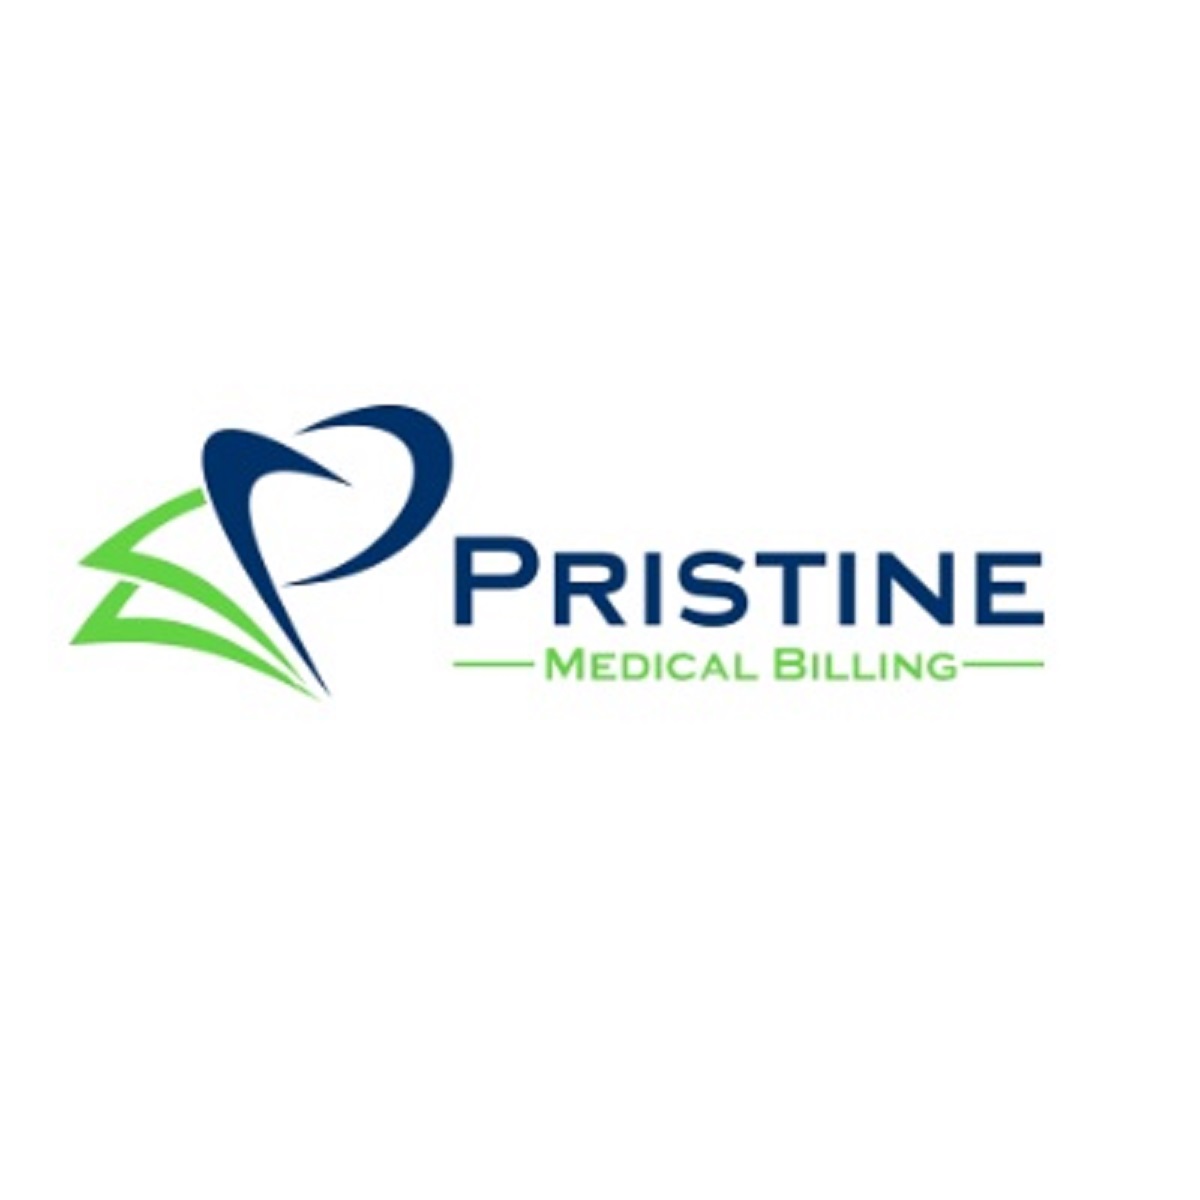 Pristine Medical Billing Services Cover Image